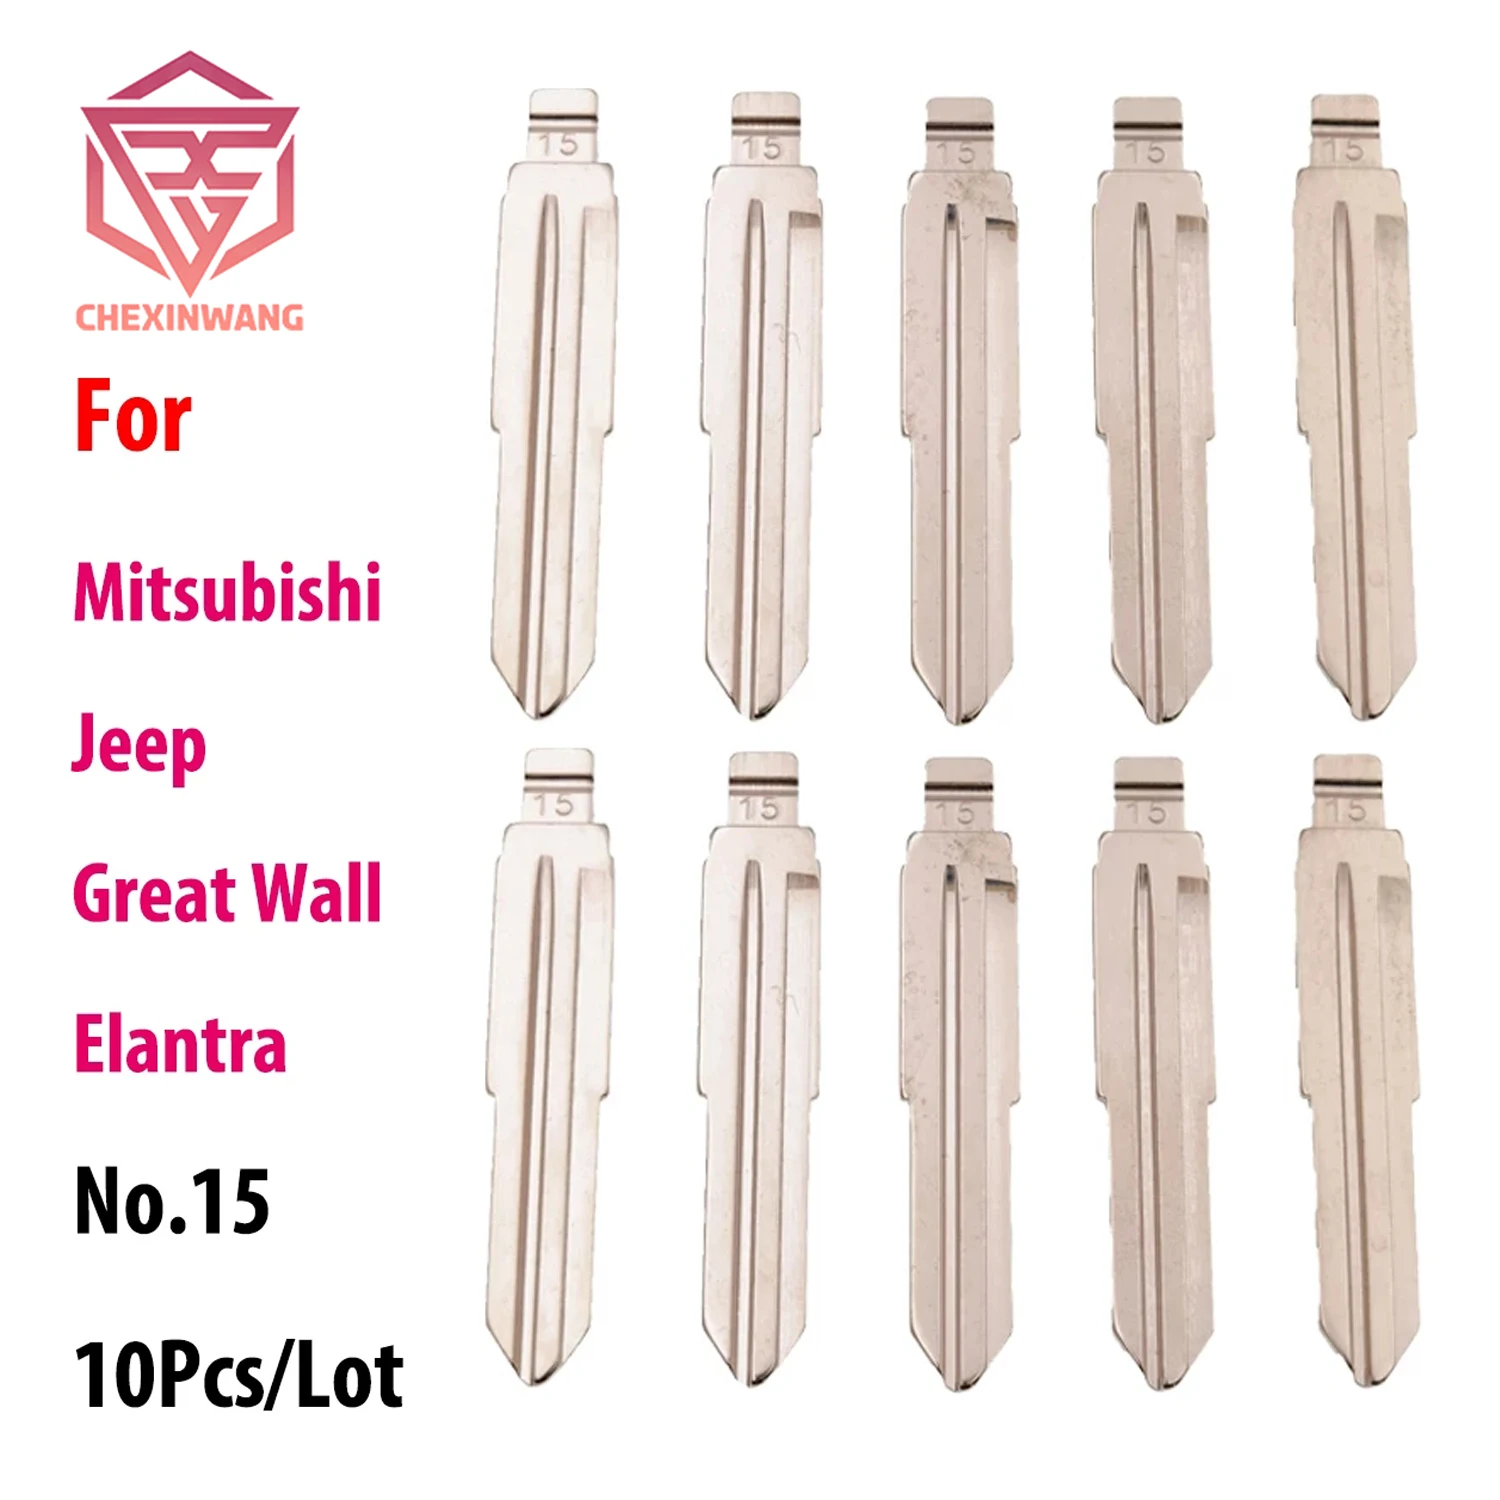 

10Pcs/Lot Flip Blank key Blade 15# For Elantra For Mitsubishi For Great Wall for KD Keydiy Xhorse VVDI remotes